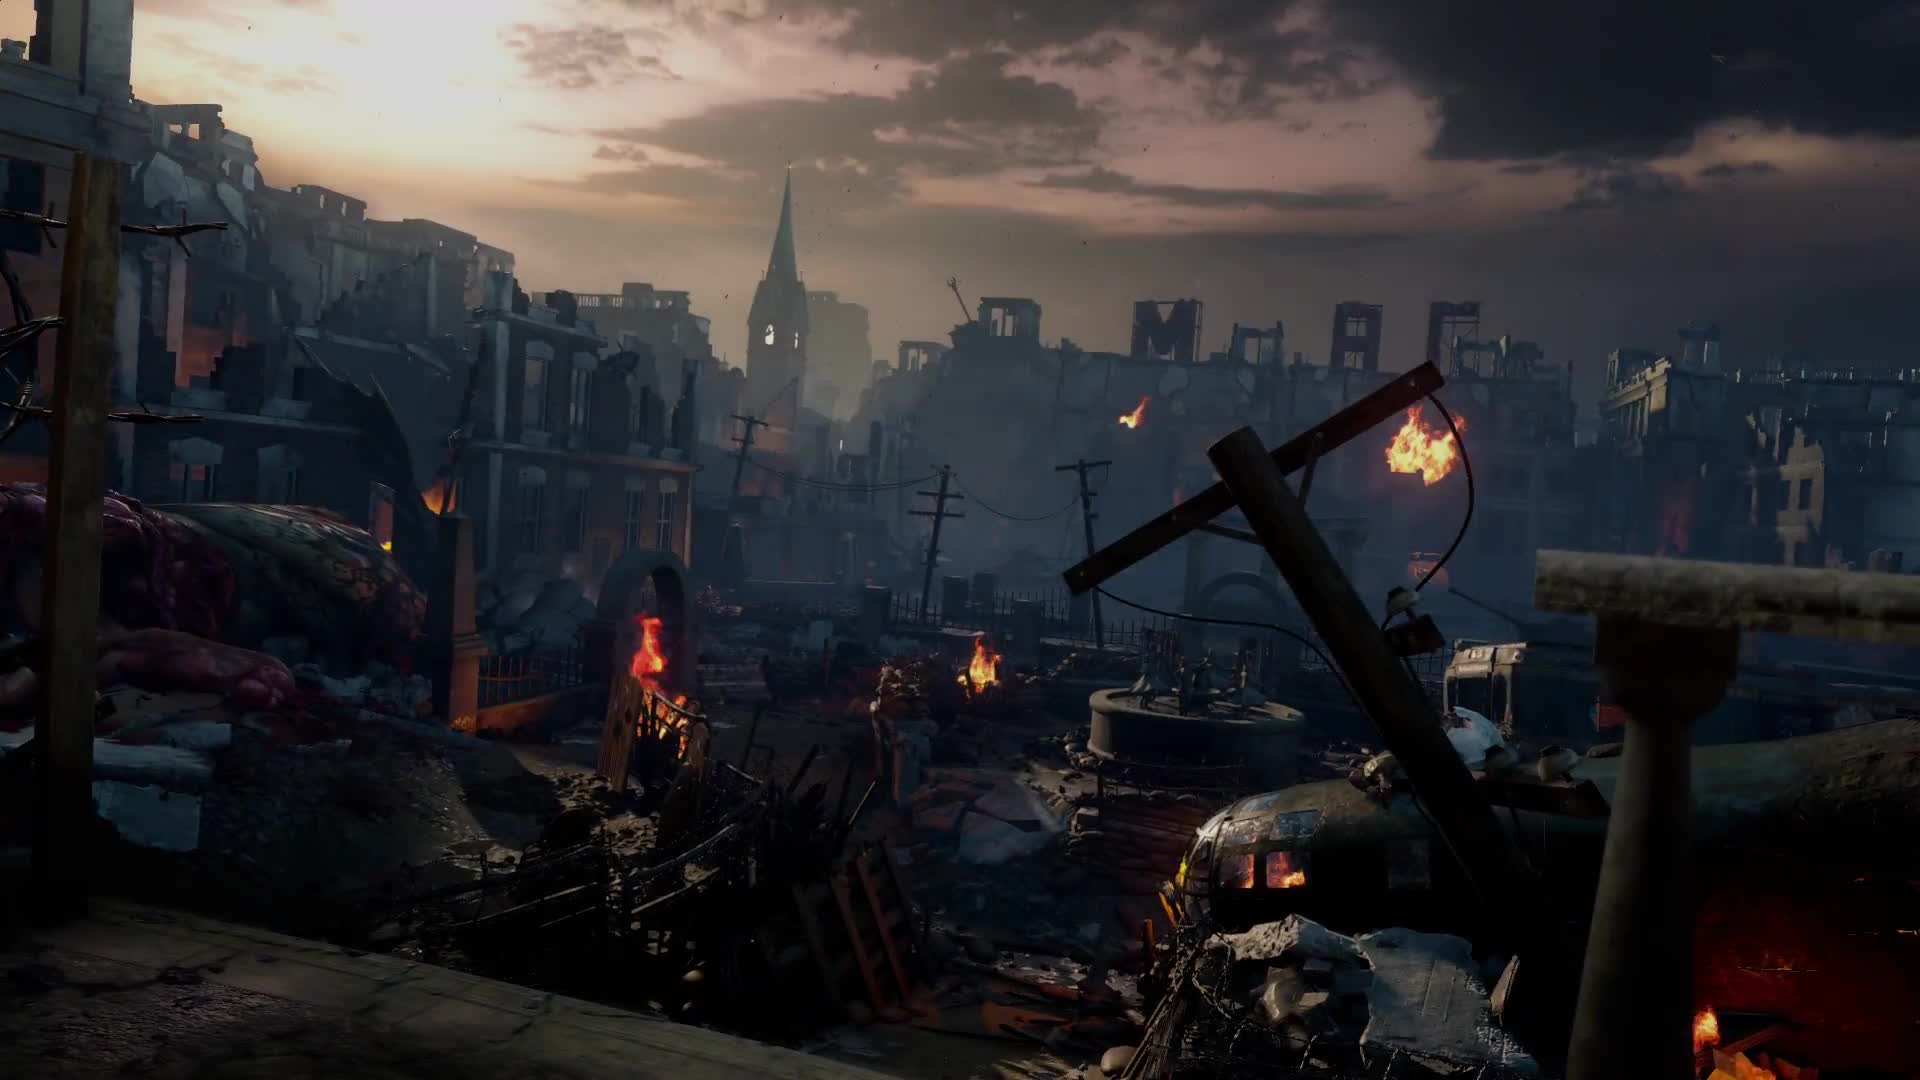 Call of Duty: Black Ops III - Descent DLC Pack: Gorod Krovi Trailer